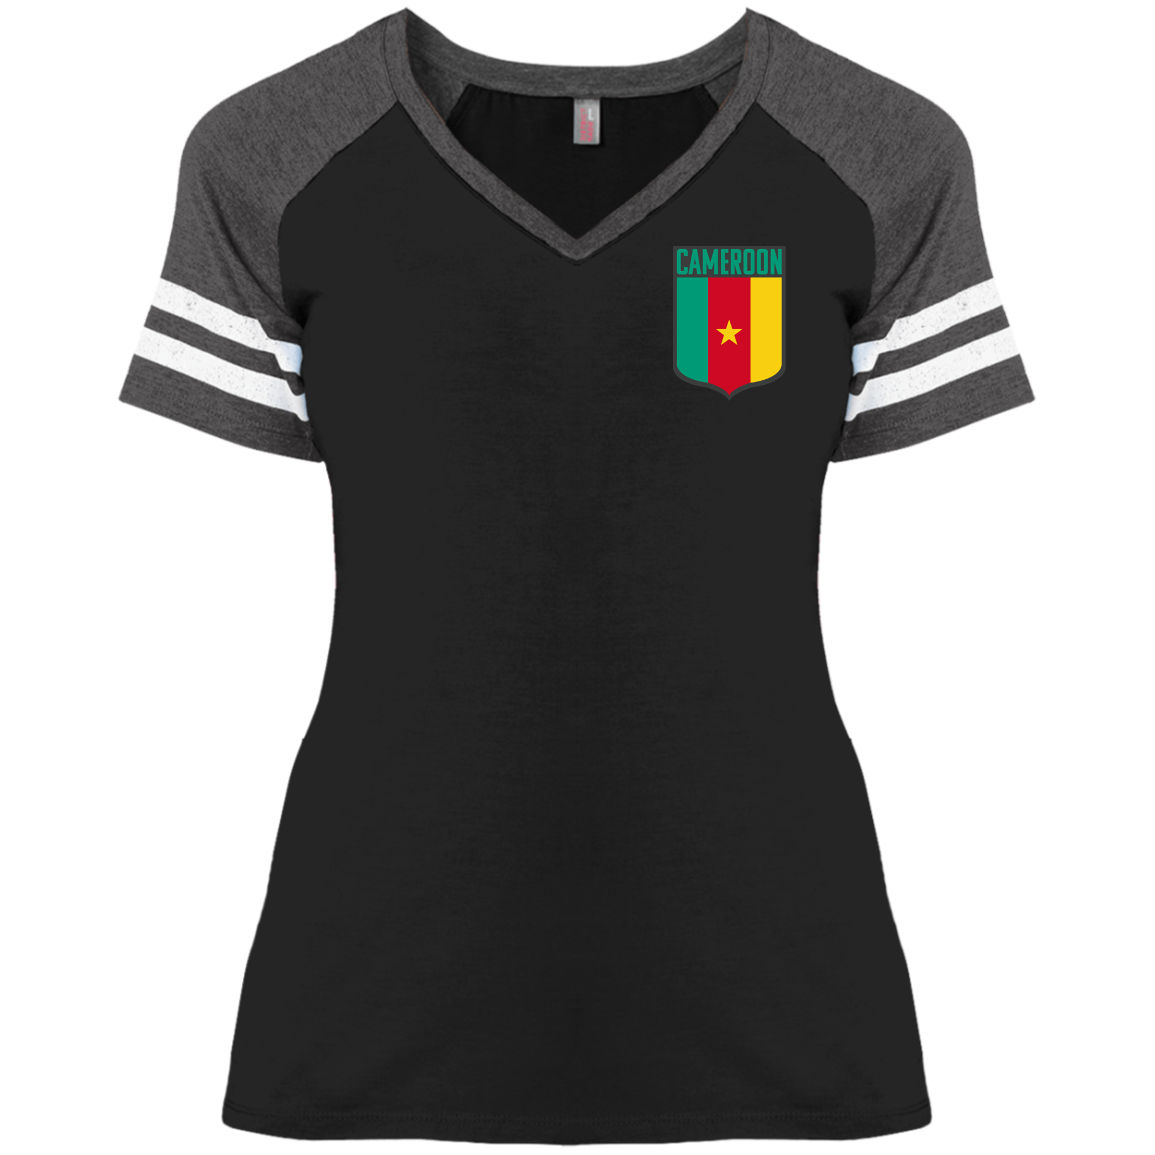 Cameroon Football Team Emblem Women's Game V-Neck T-Shirt